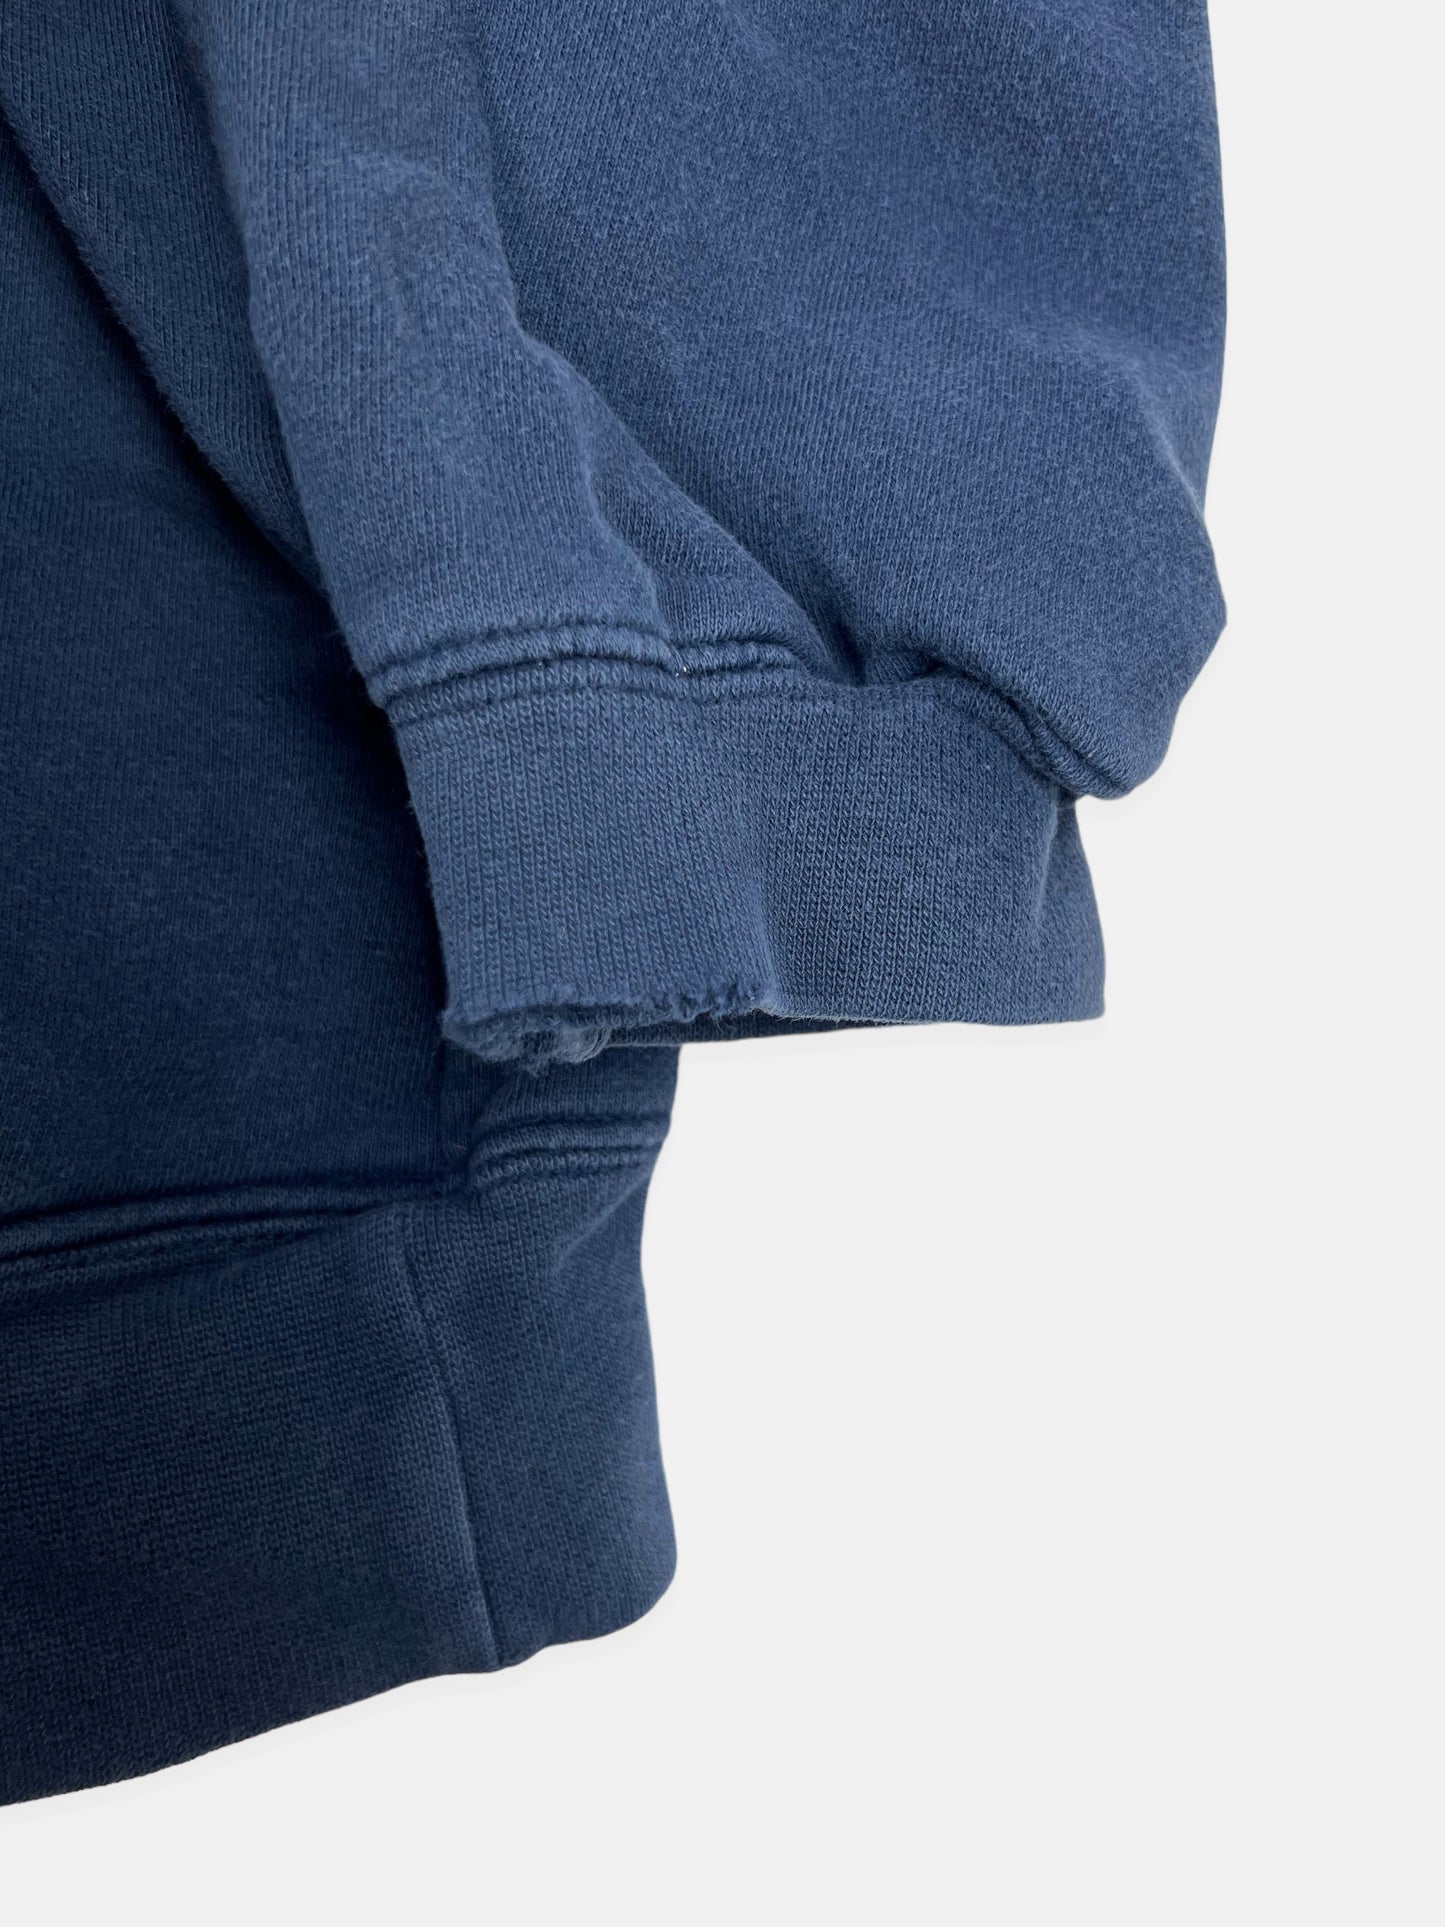 90's Penn State Lions Embroidered Vintage Quarterzip Sweatshirt Size M-L